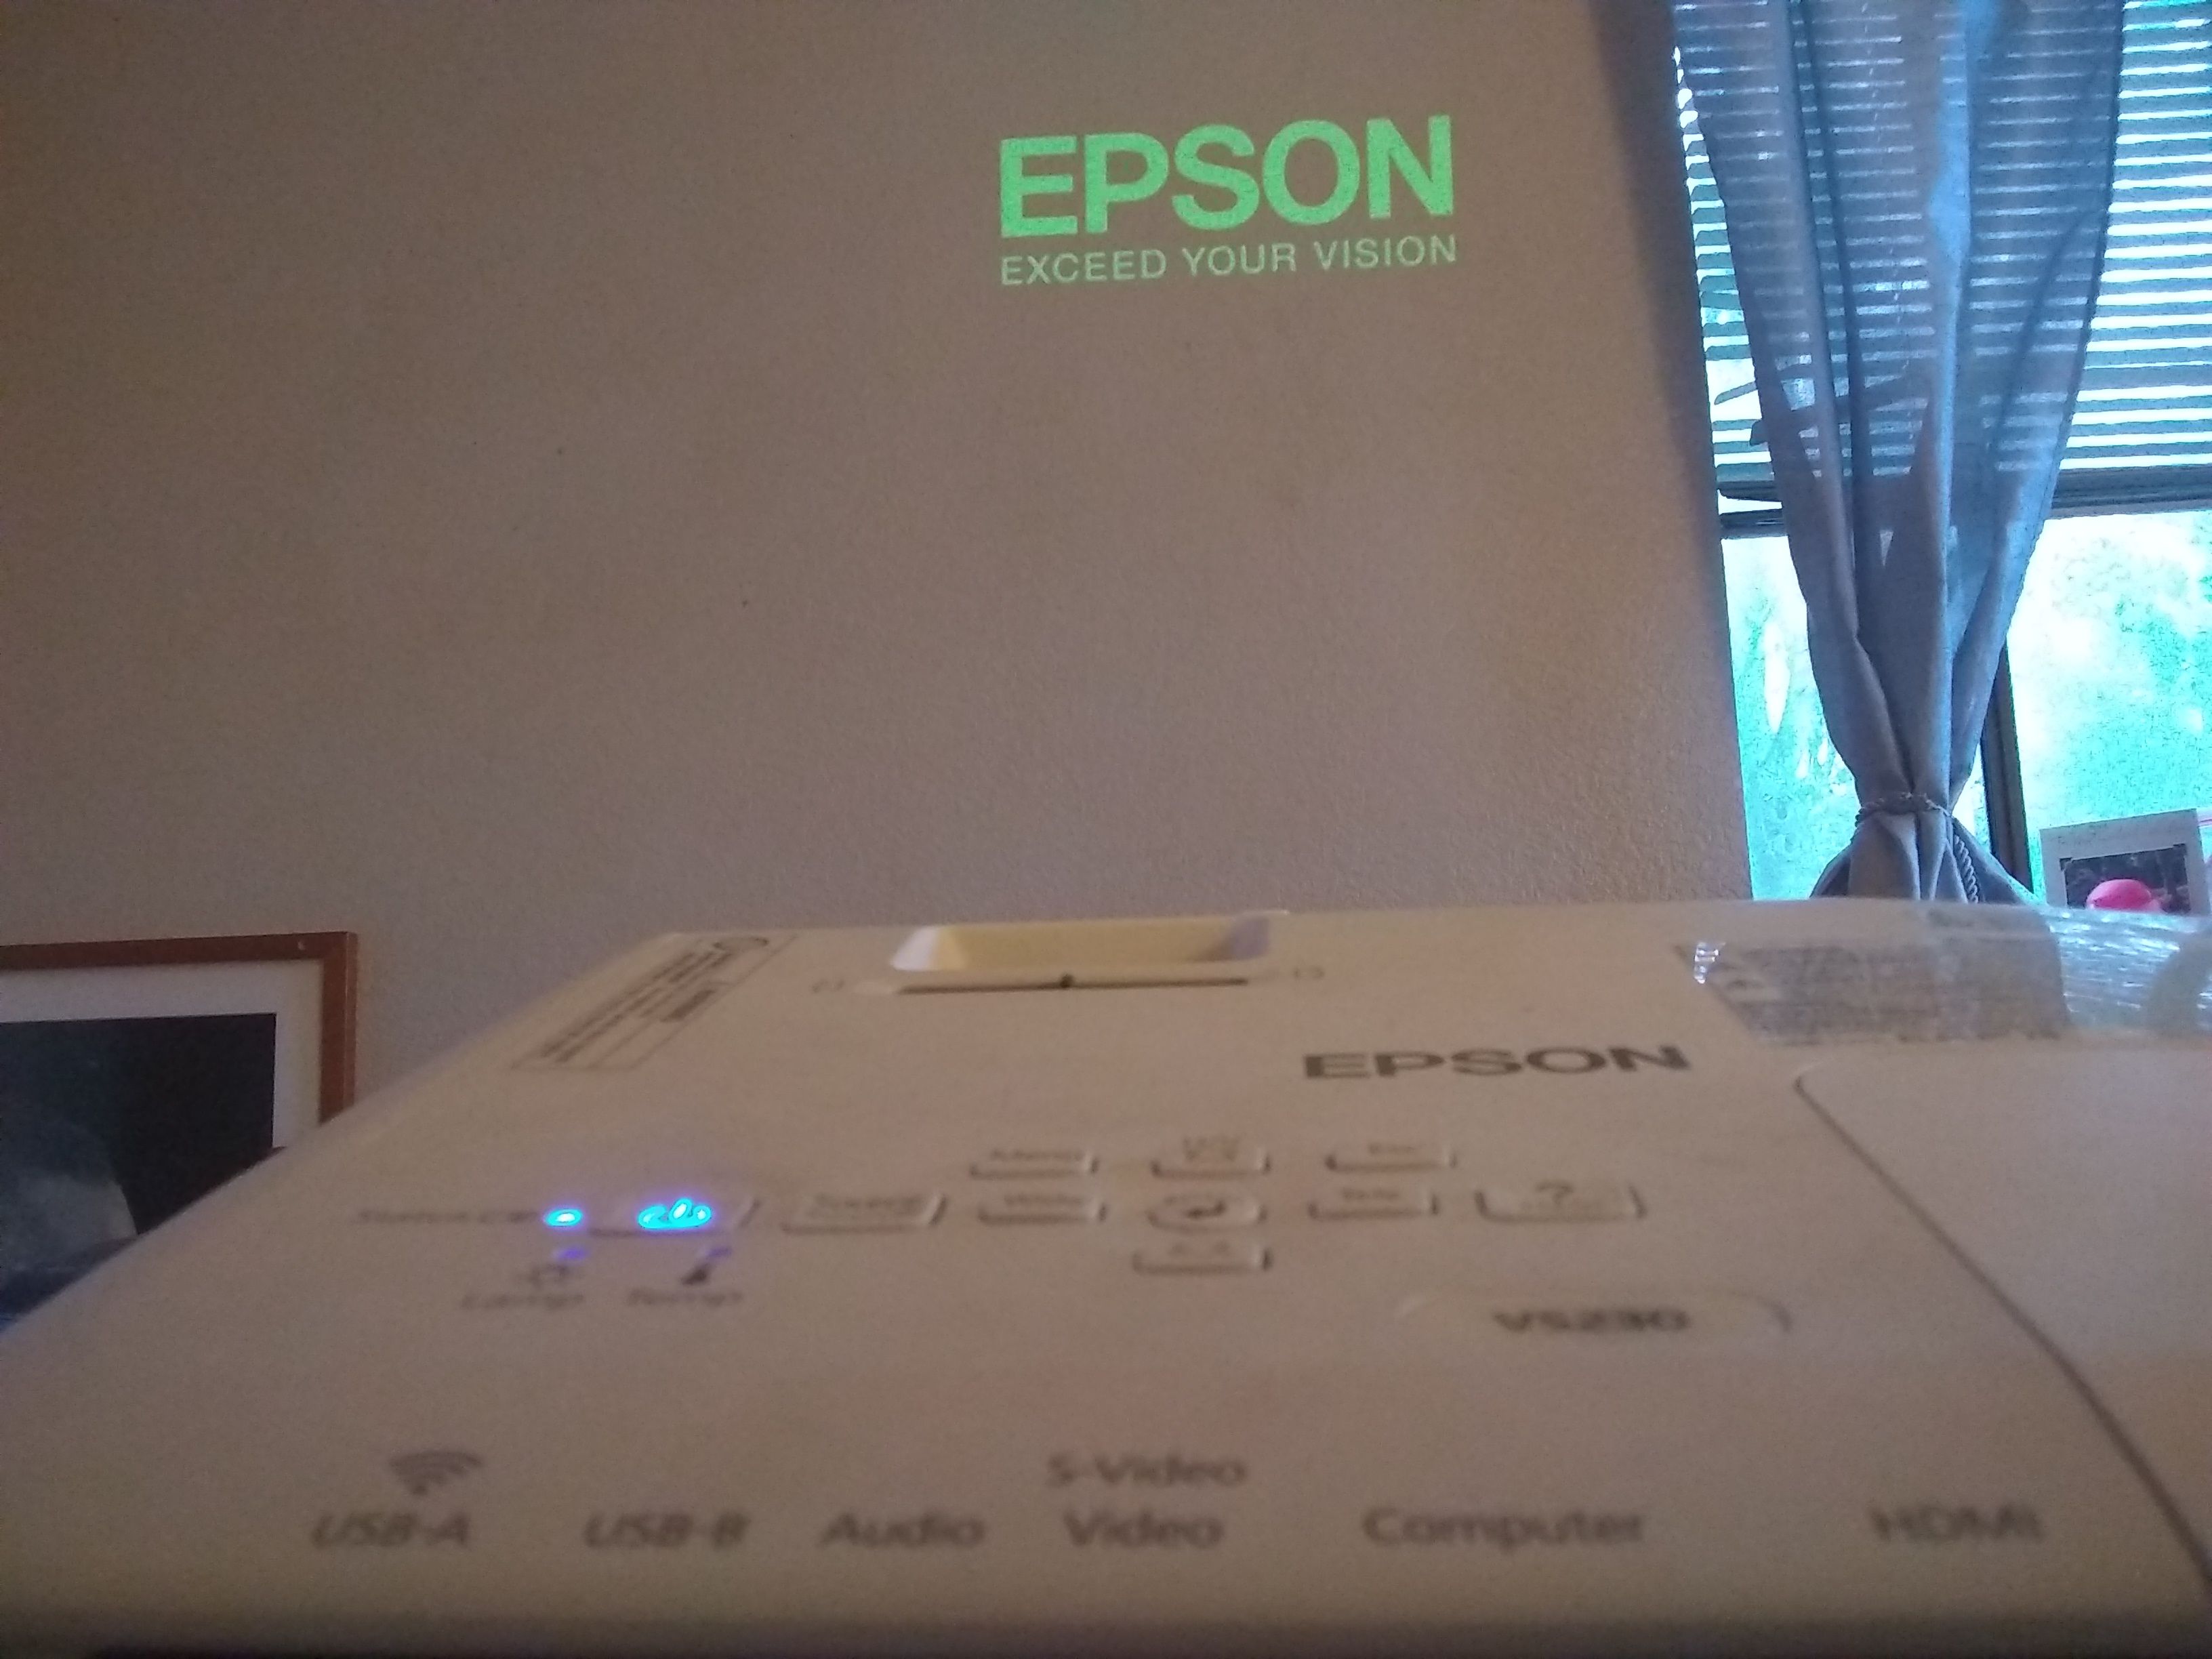 Epson HD Projector Vs230